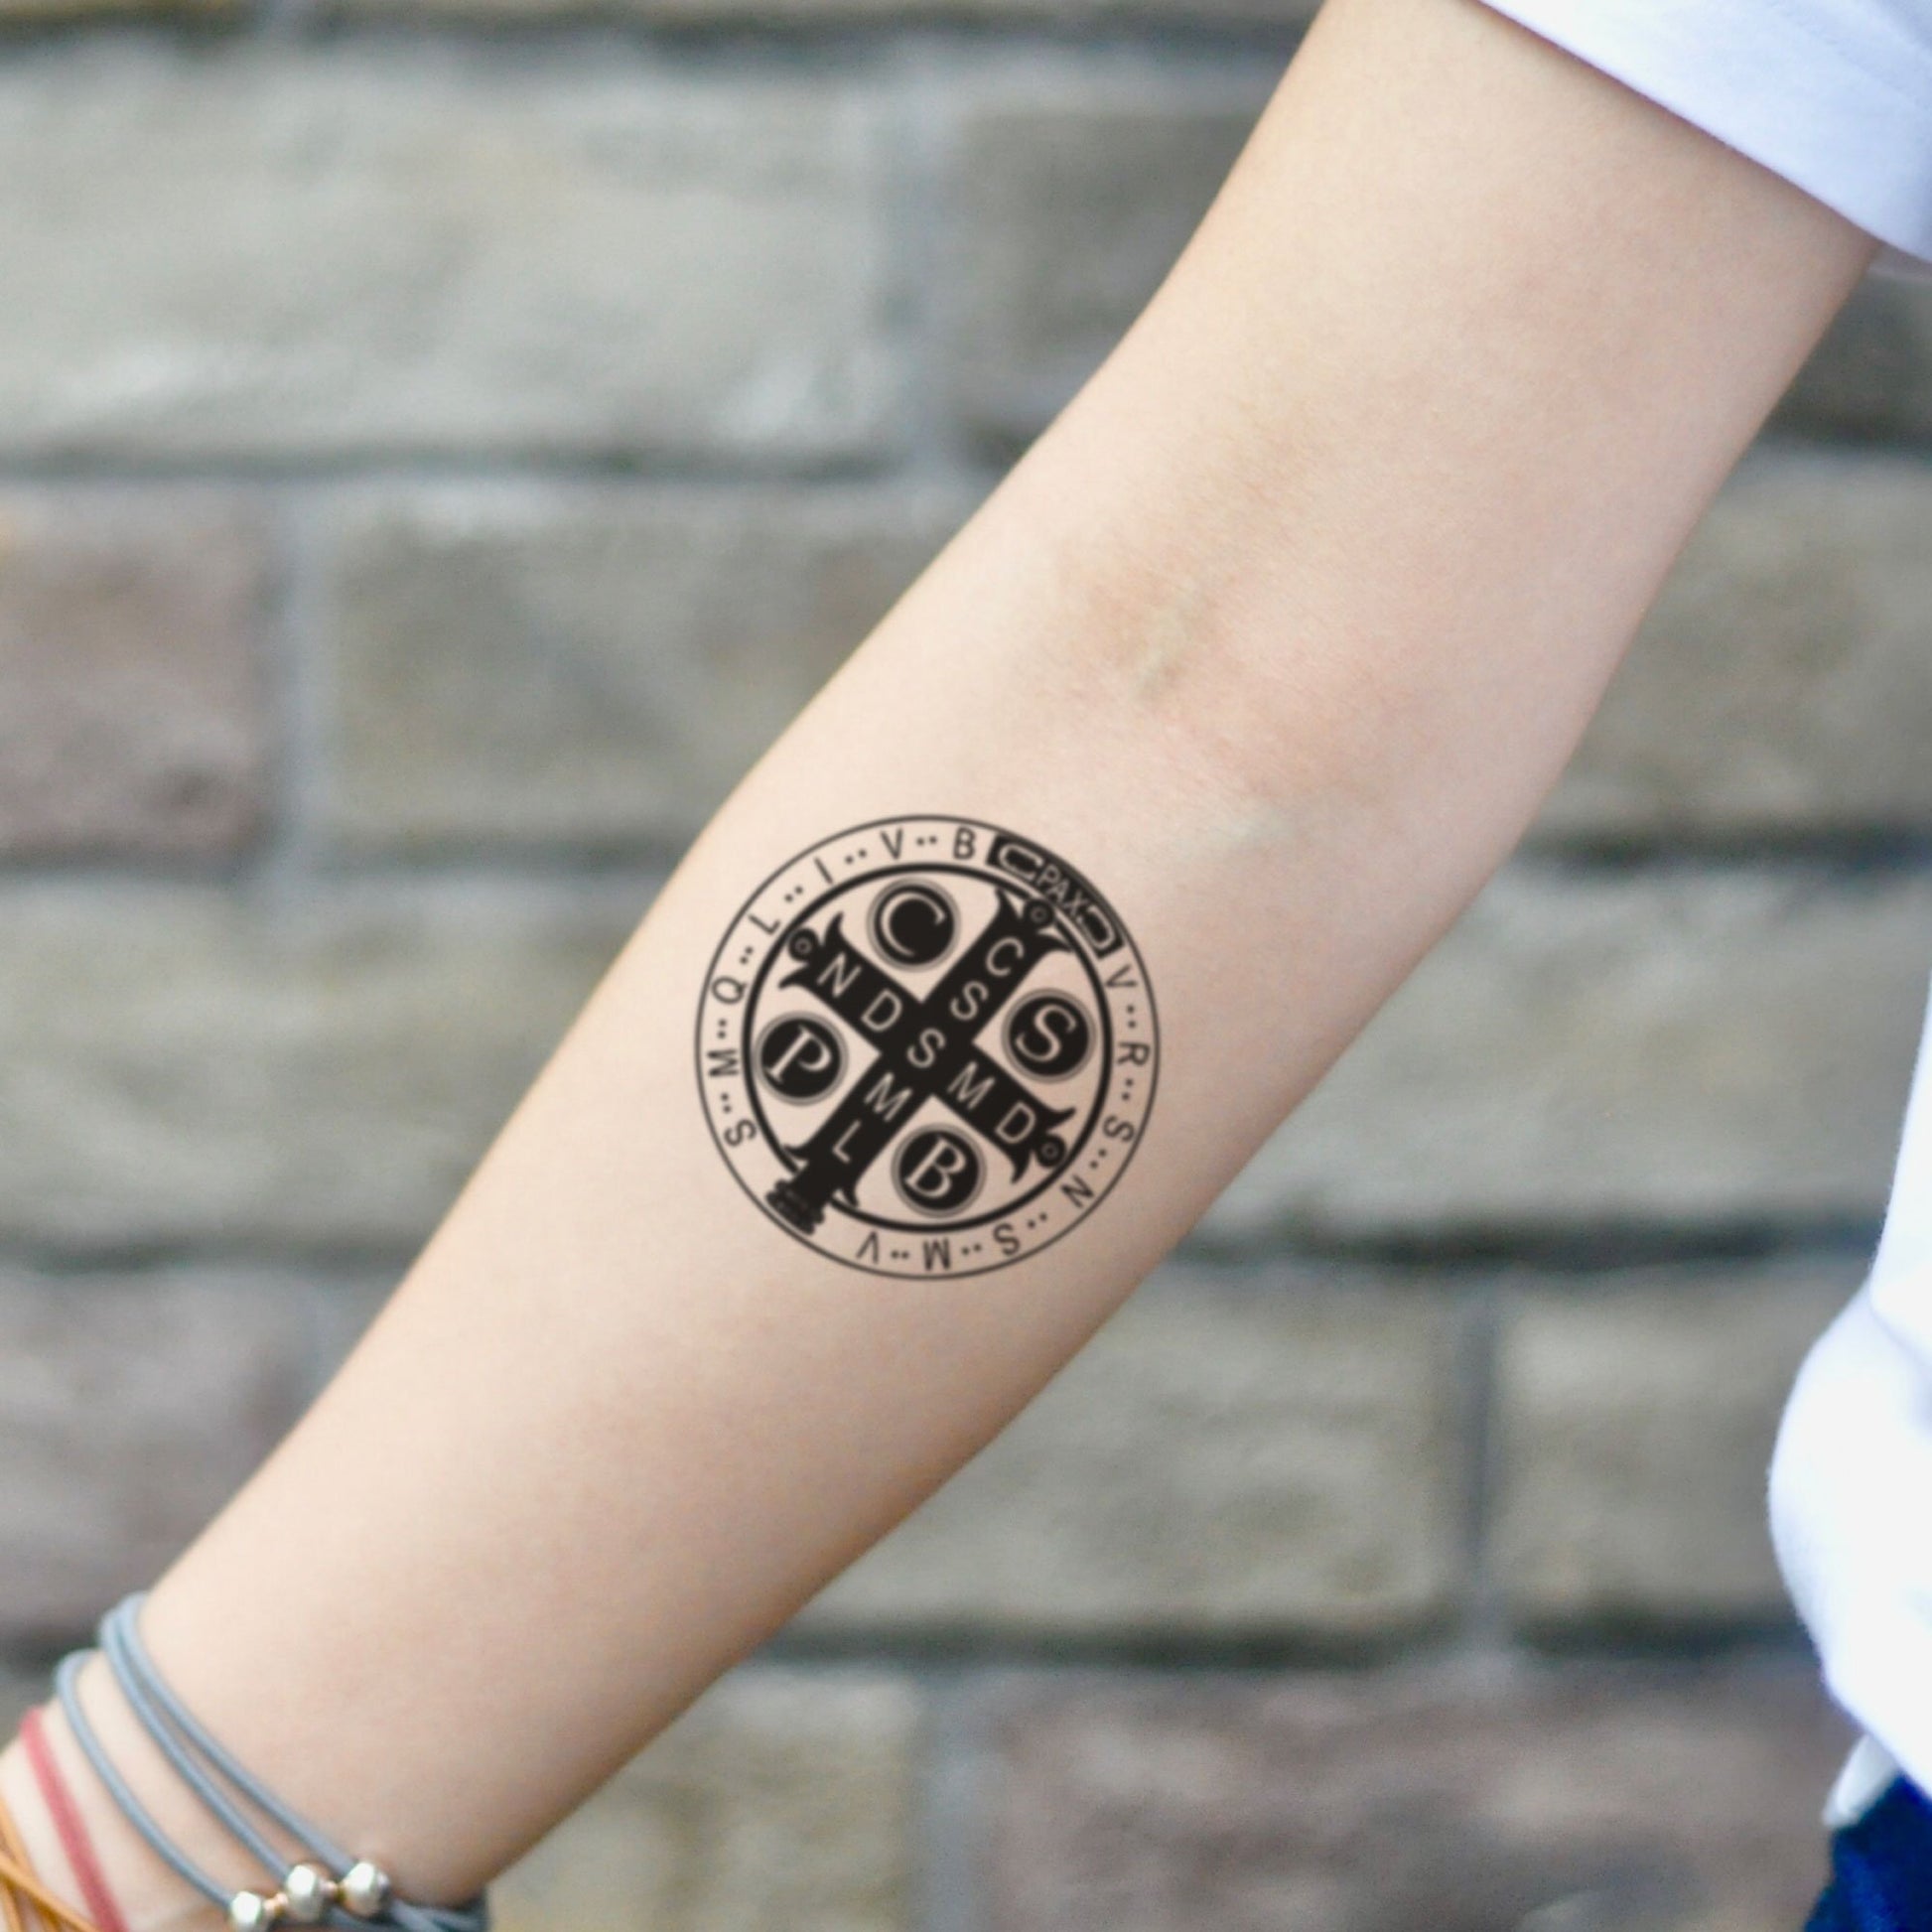 fake small st benedict medal catholic cross symbol illustrative temporary tattoo sticker design idea on inner arm